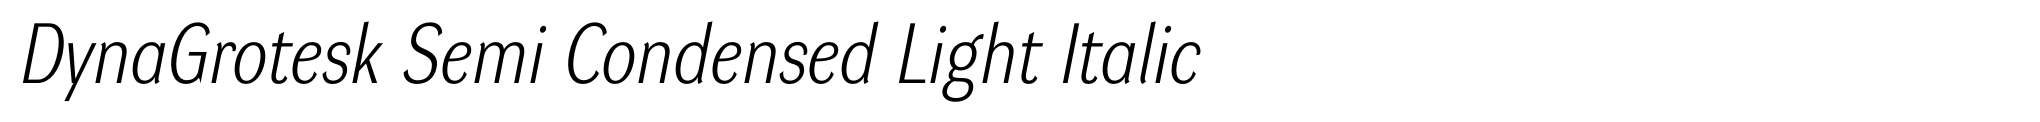 DynaGrotesk Semi Condensed Light Italic image